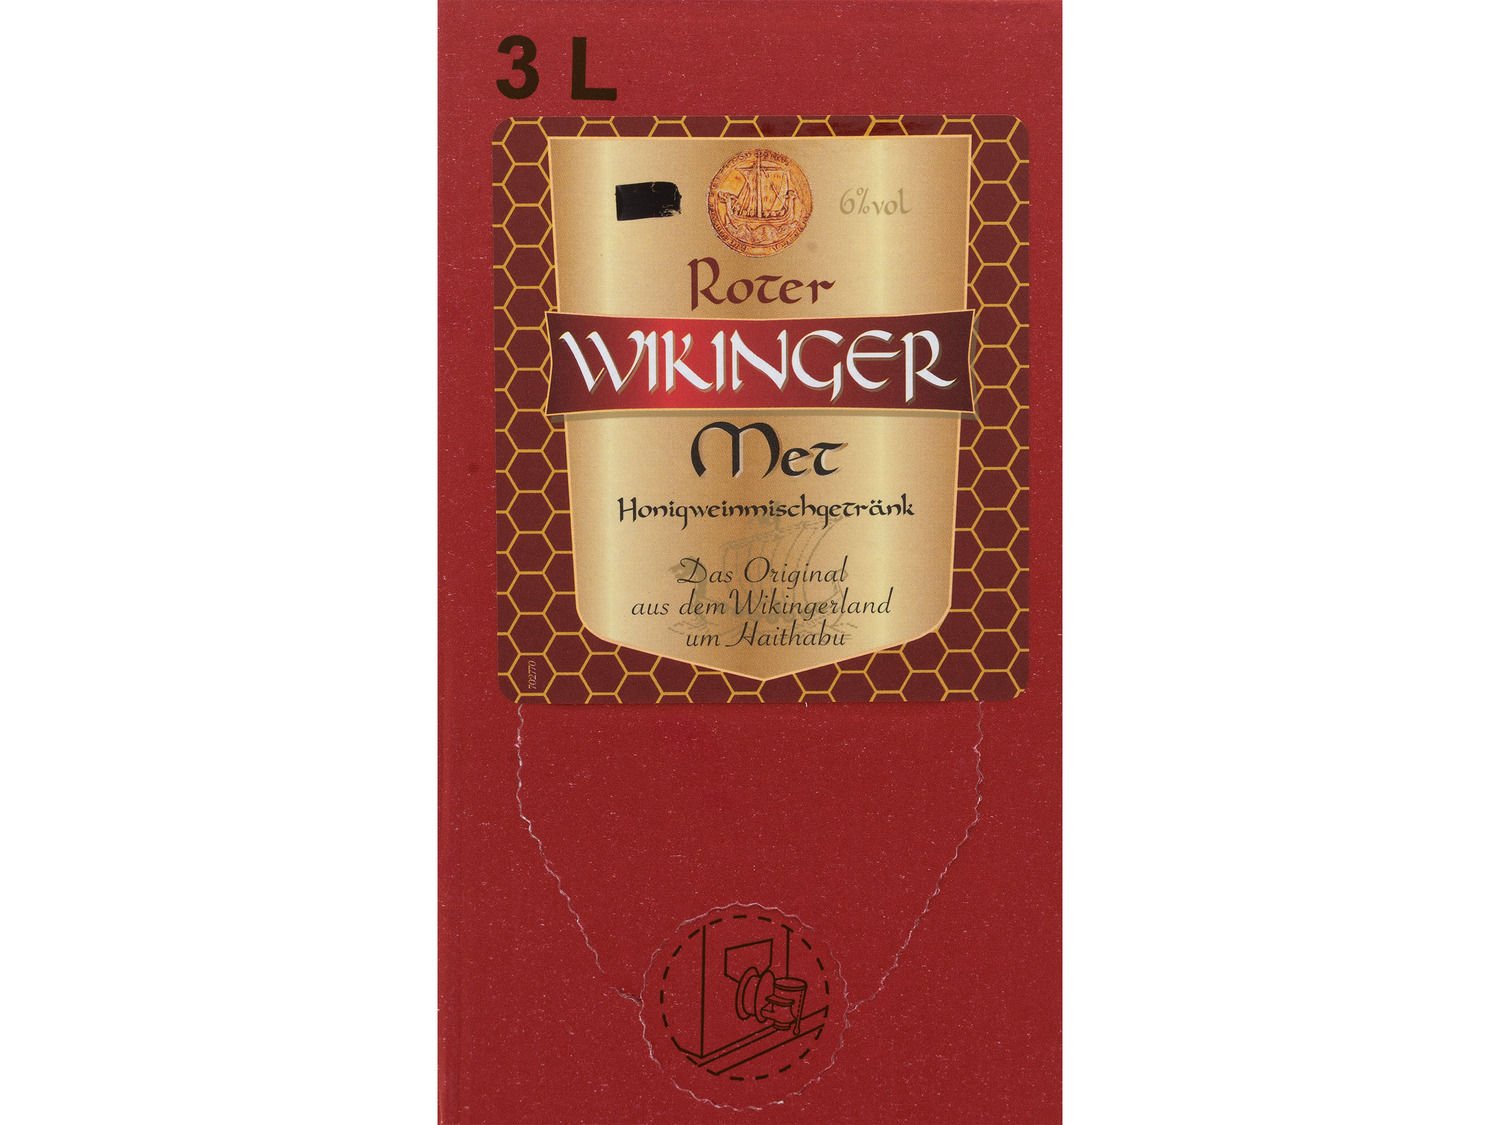 Met 3,0-l-Bag-in-Box, Wikinger Honigweinmischget… Roter